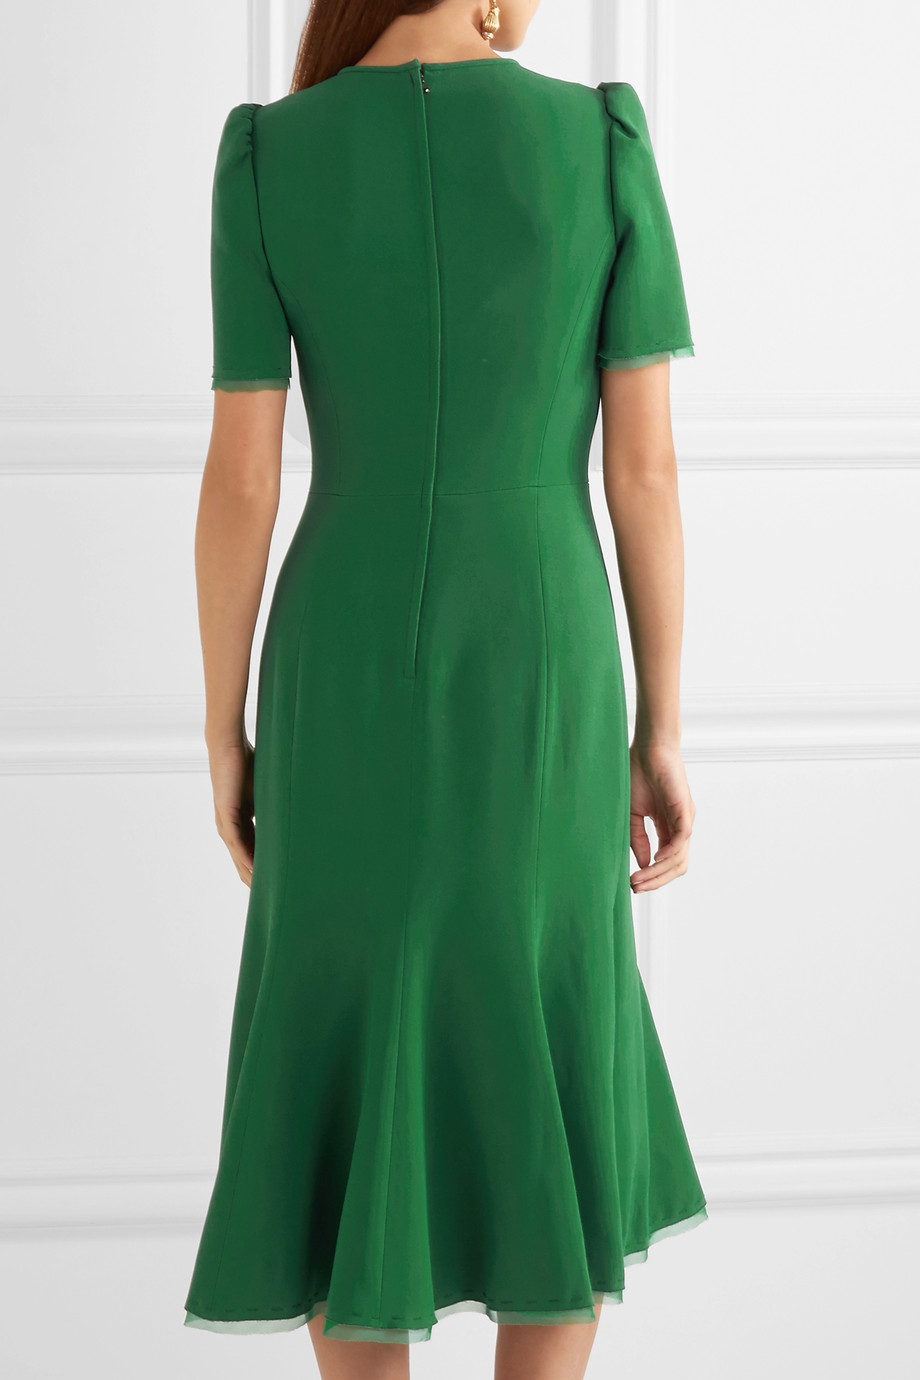 Dolce \u0026 Gabbana Green Midi Dress